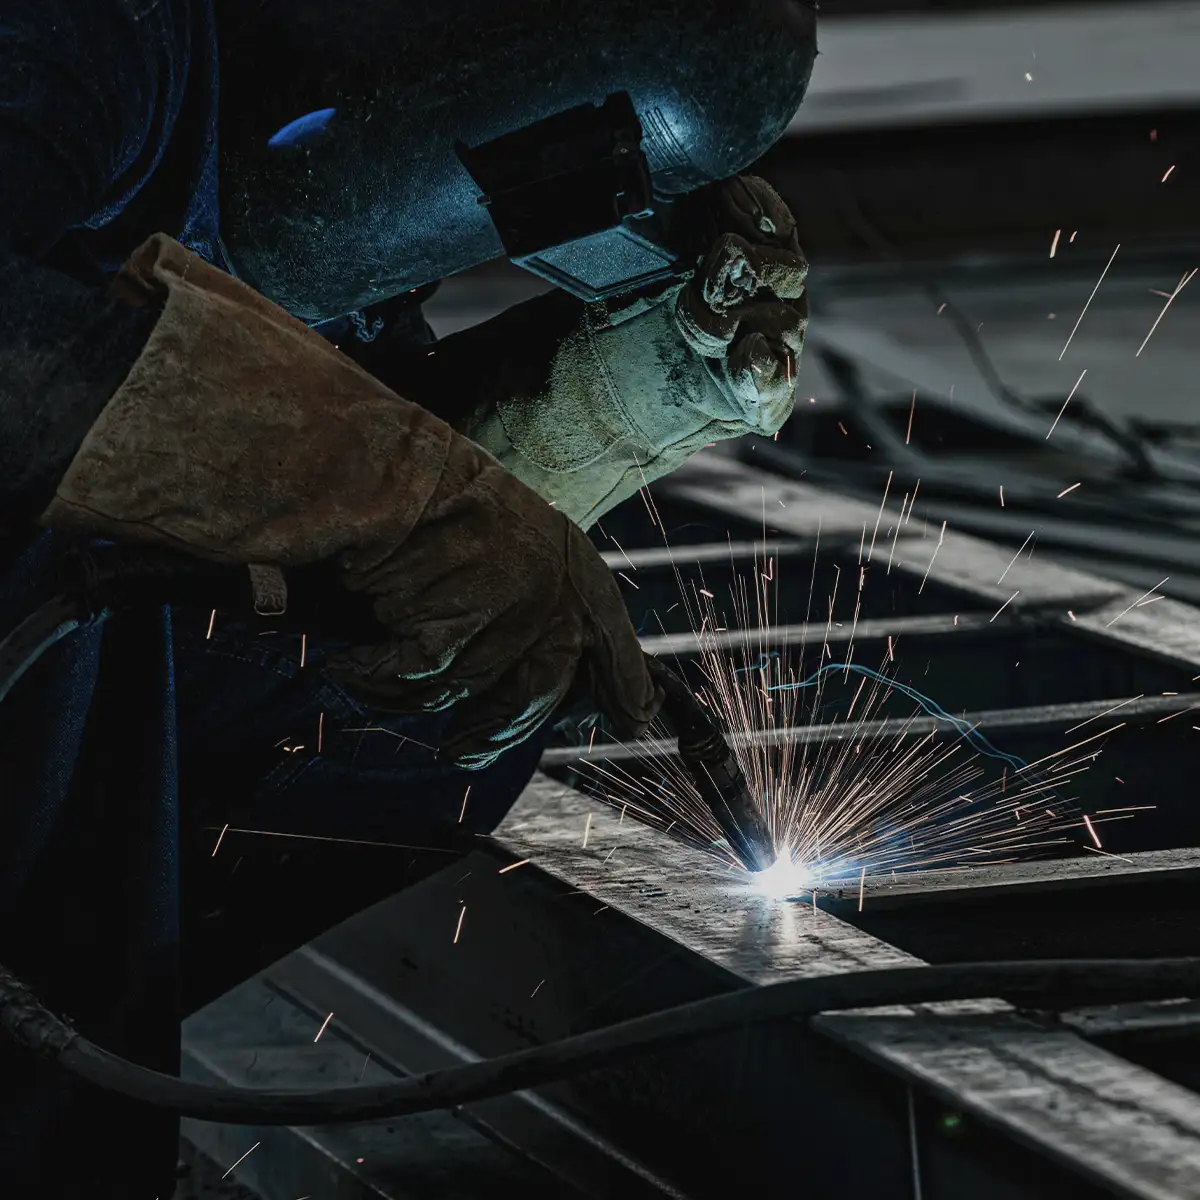 Australia slashes acceptable workplace welding fume limit 1200